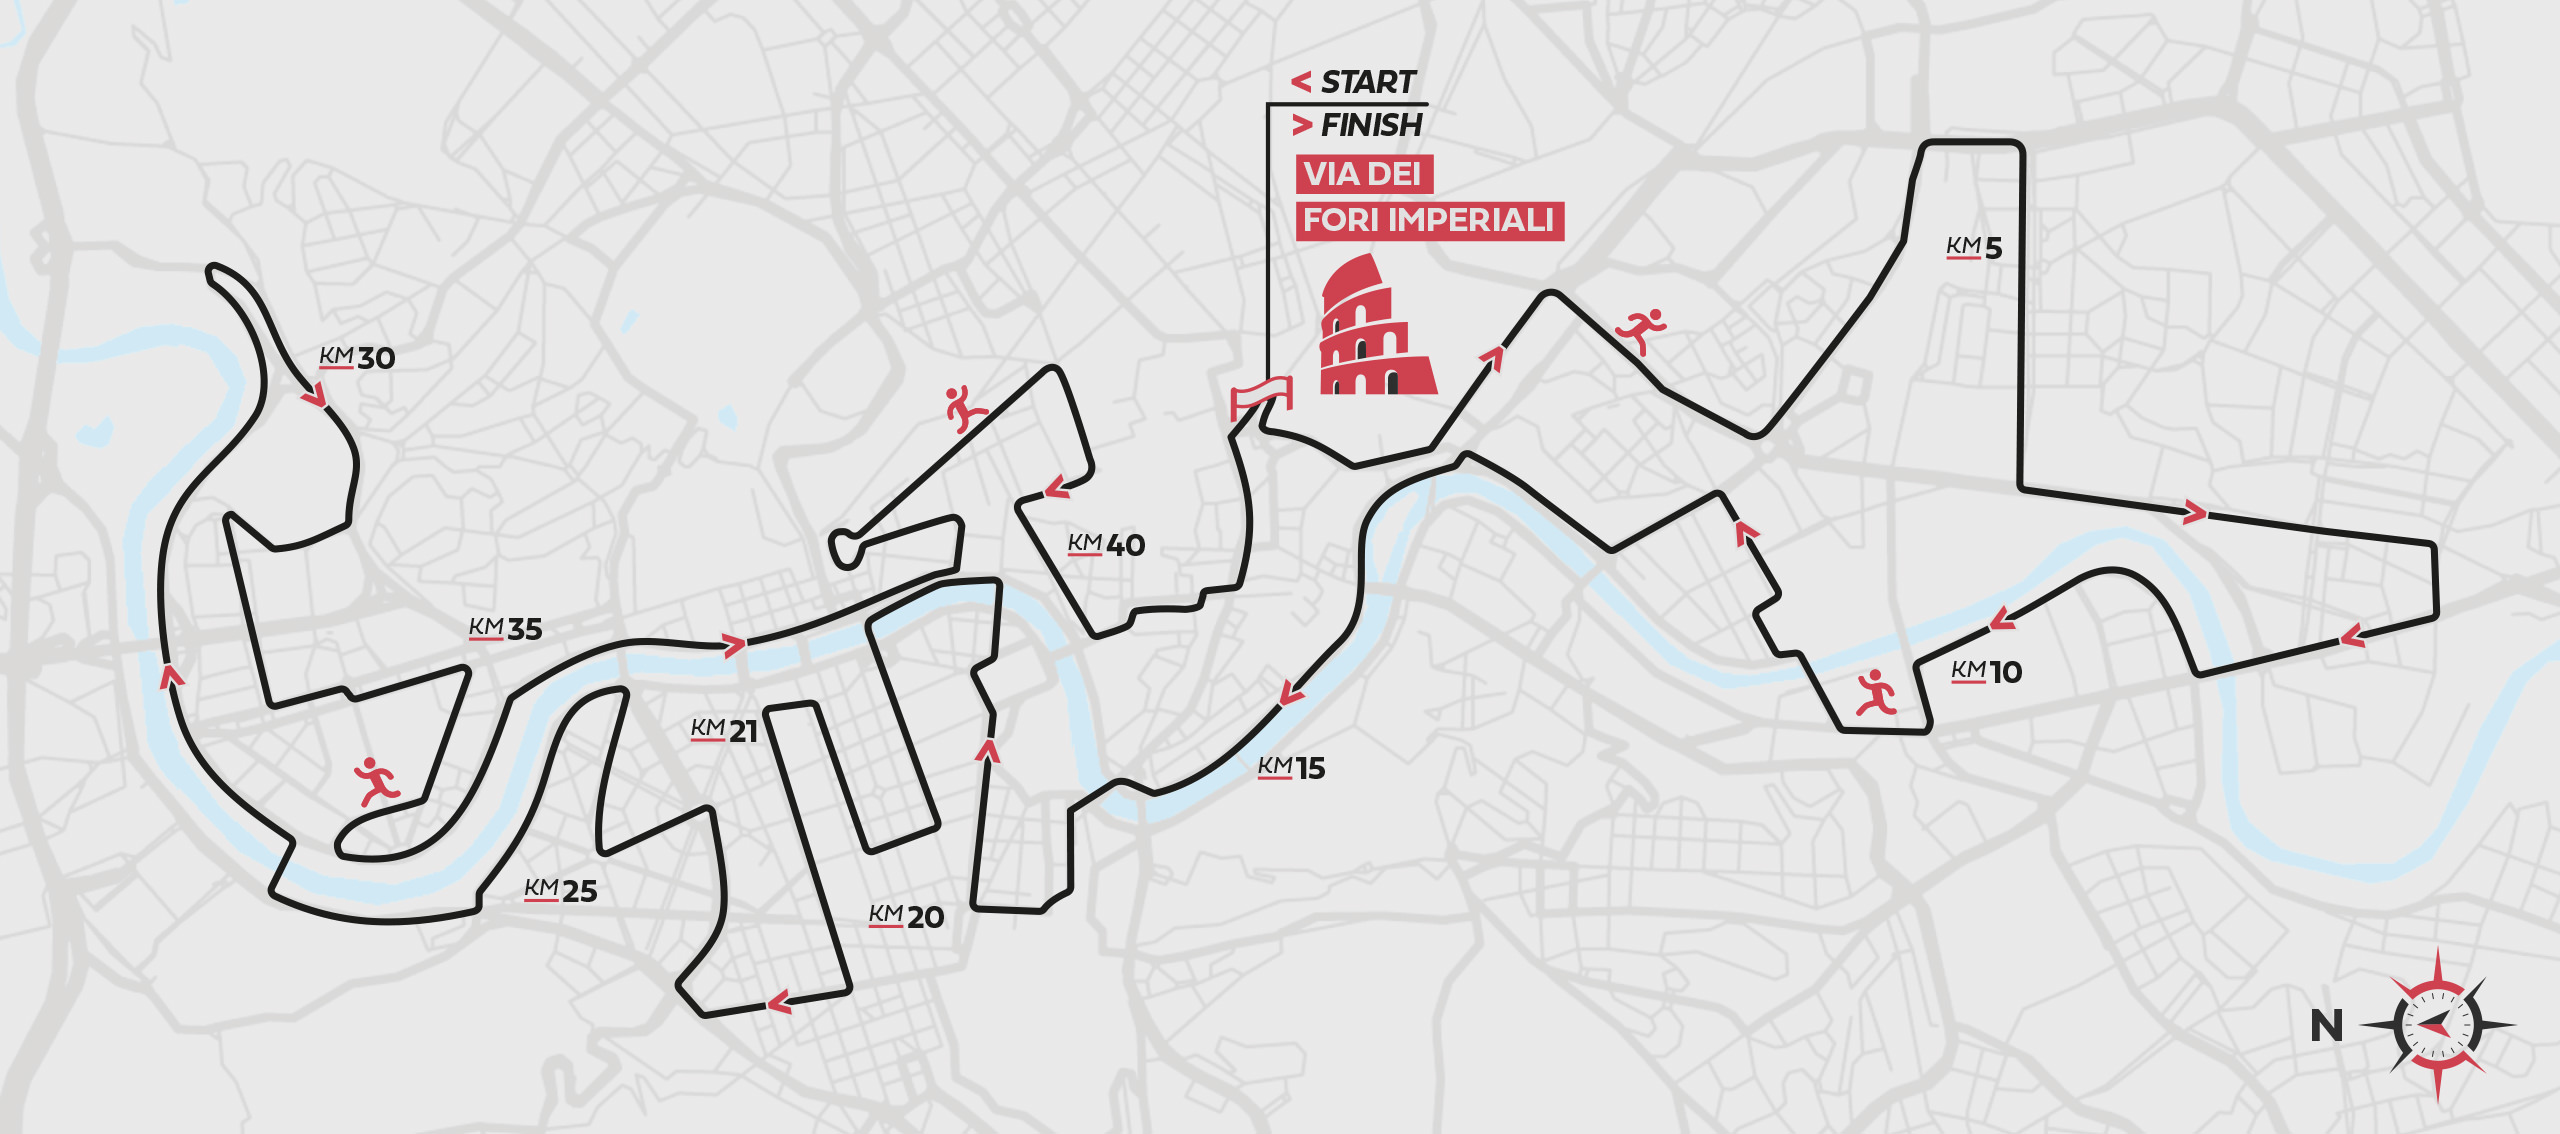 The Rome marathon 2021 route 